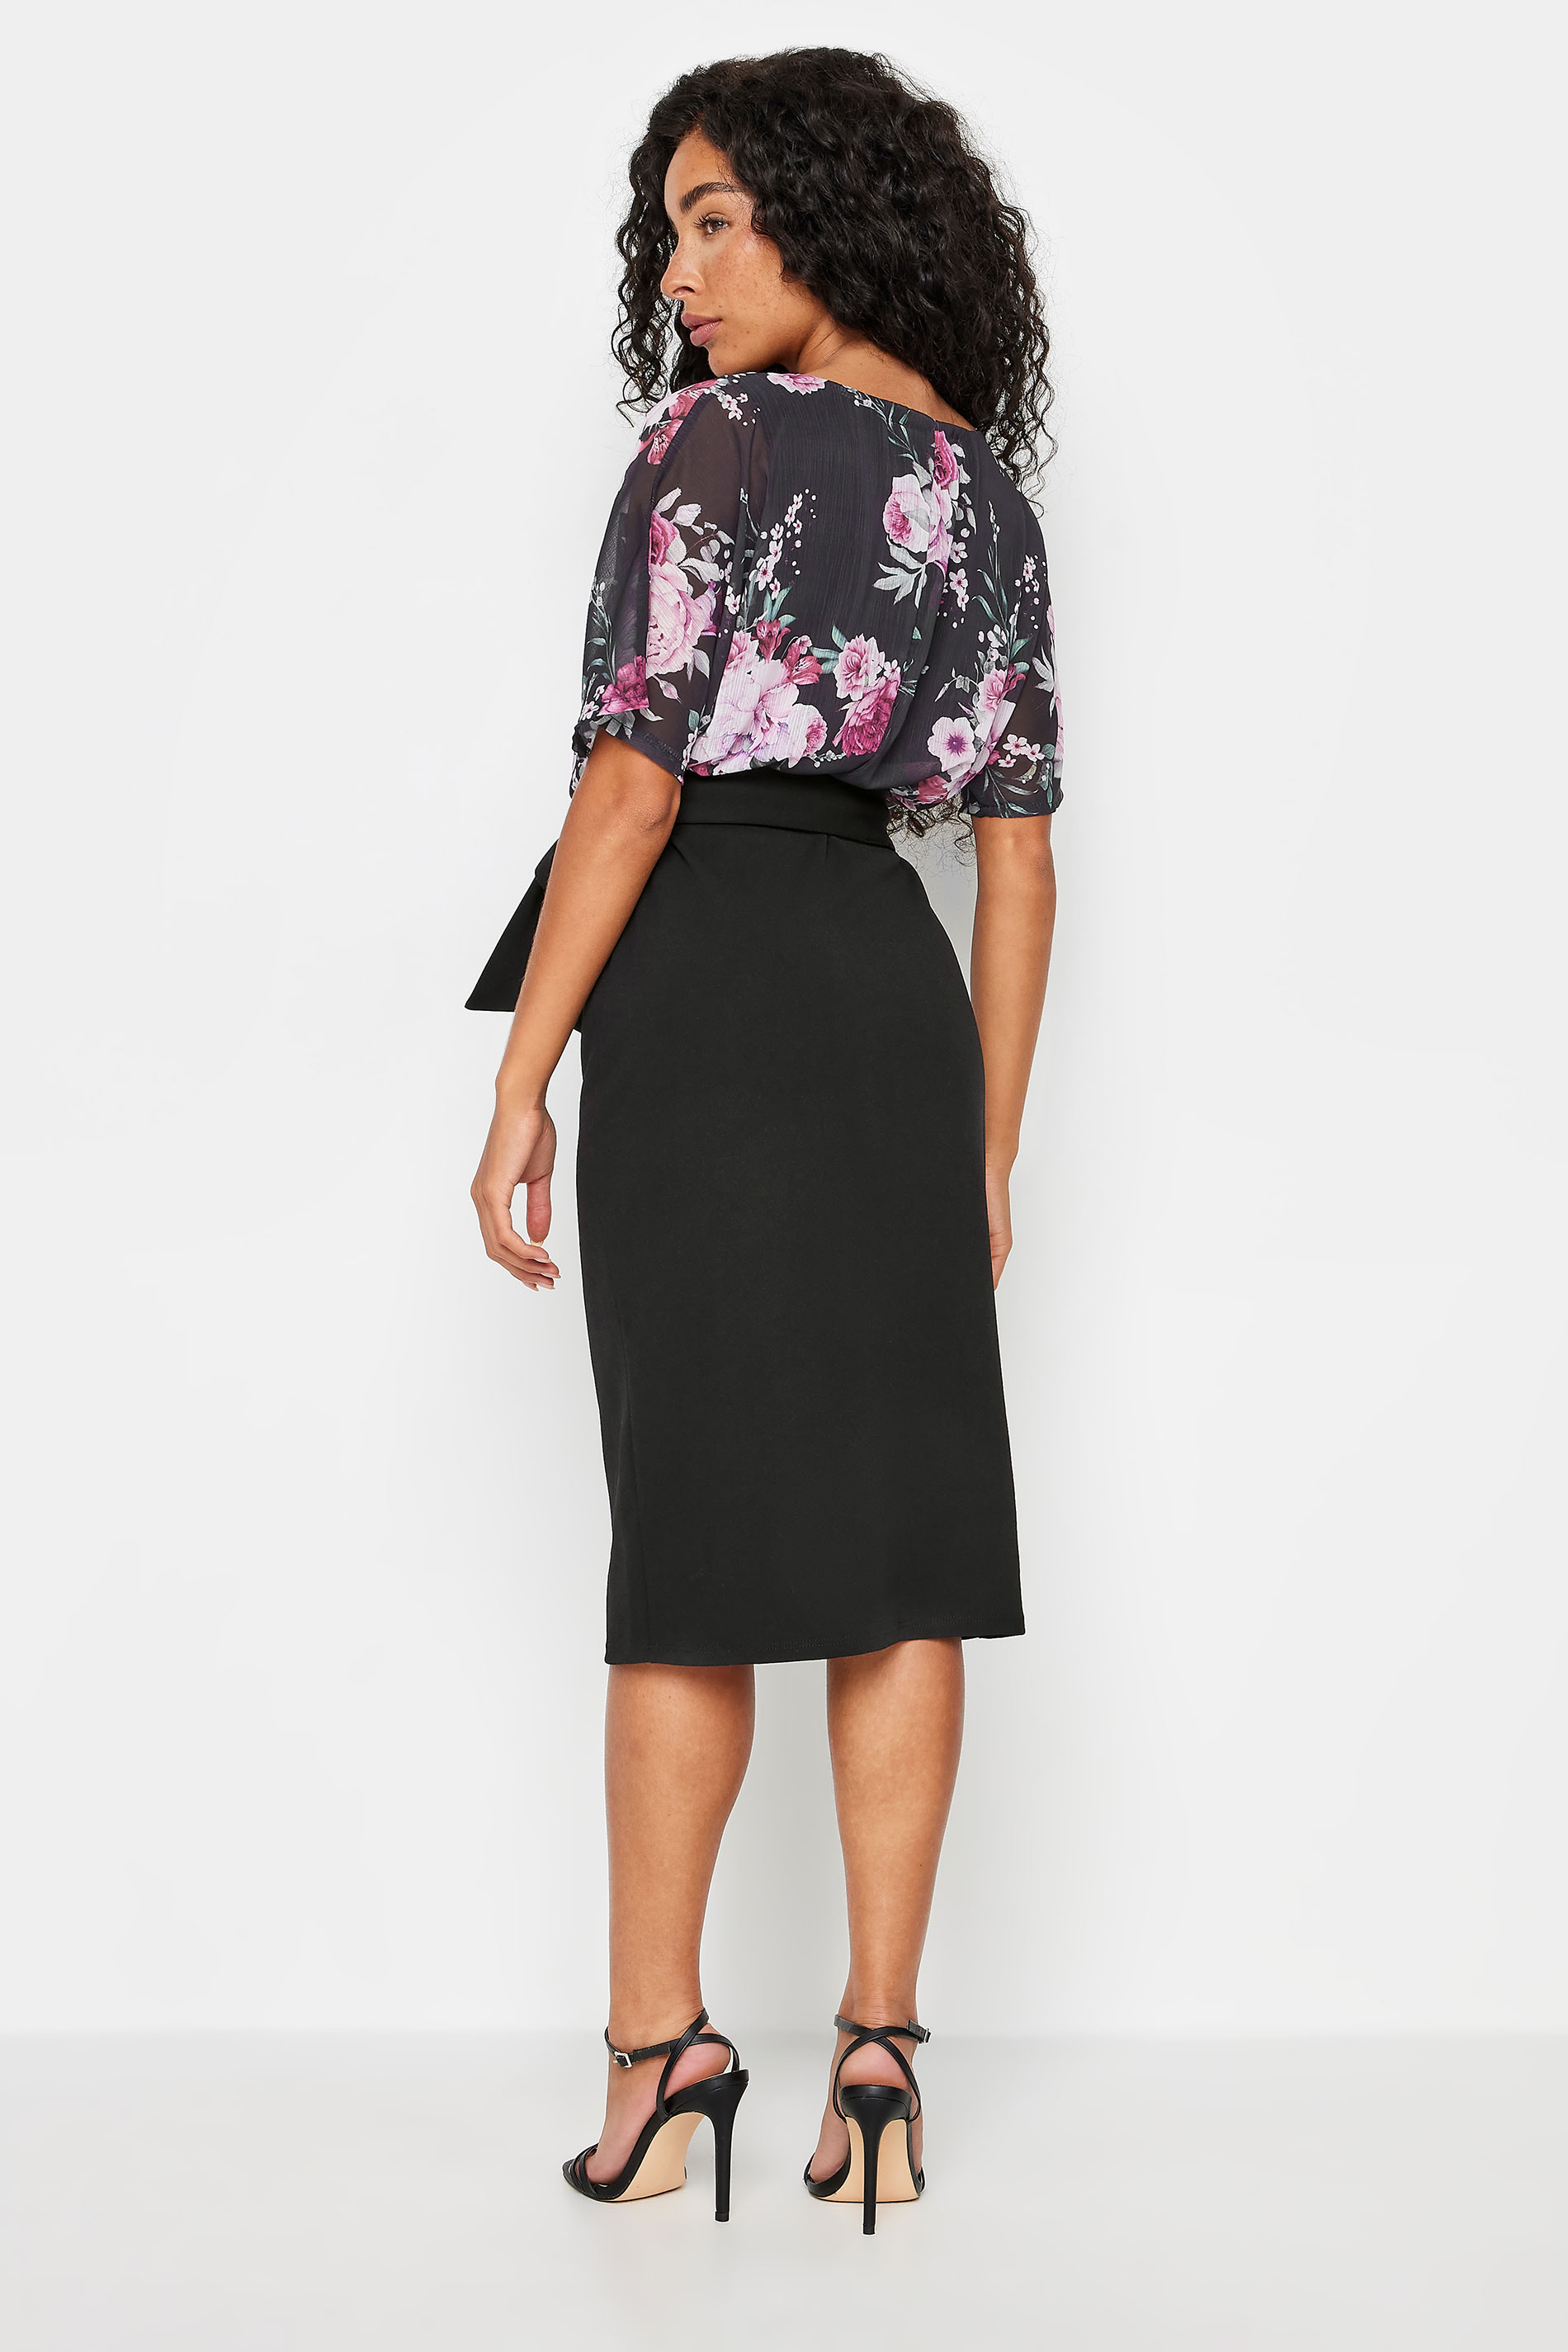 M&Co Petite Black Floral Print 2 In 1 Tie Belt Dress | M&Co 2